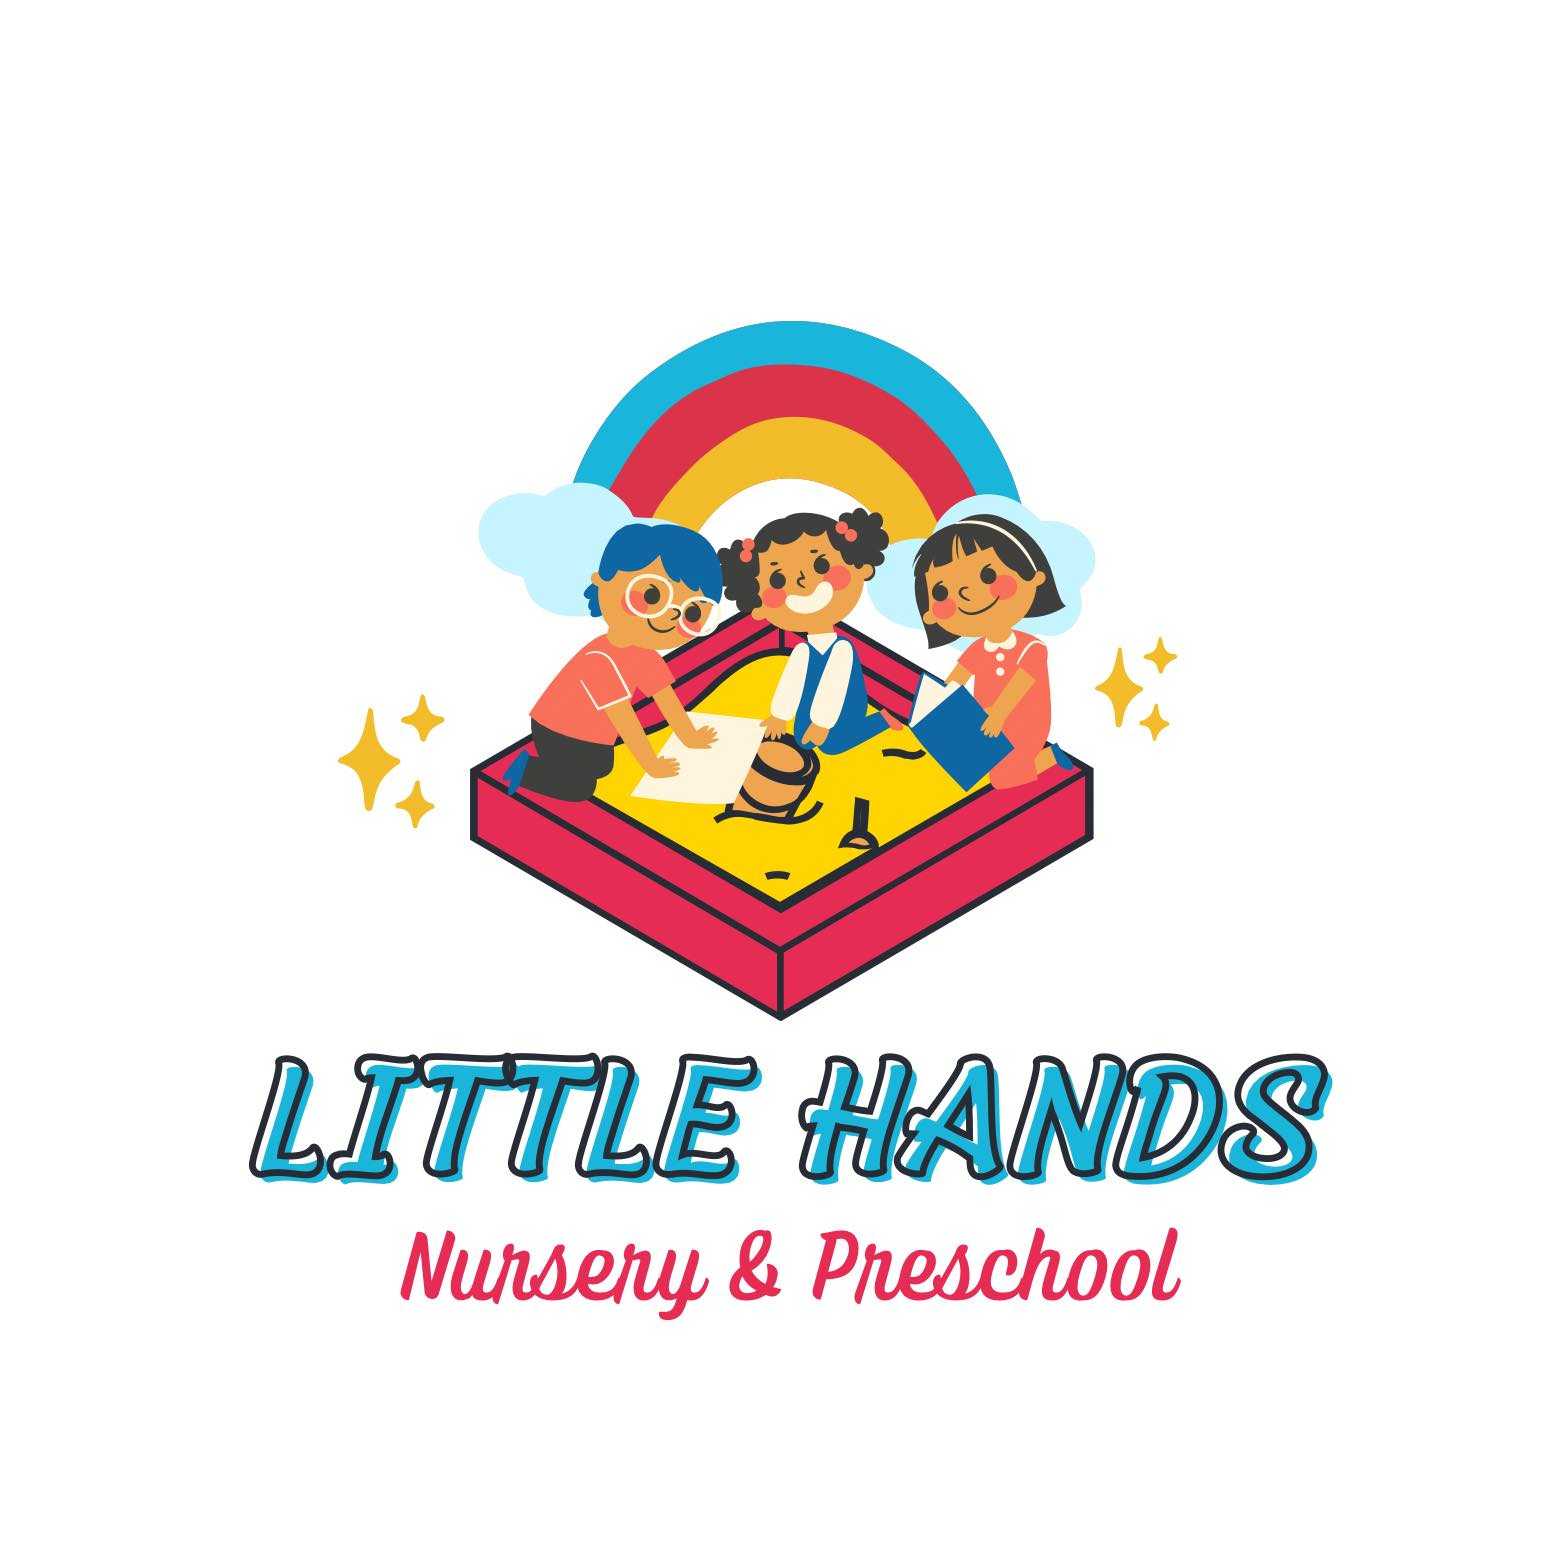 Little Hands Nursery & Preschool